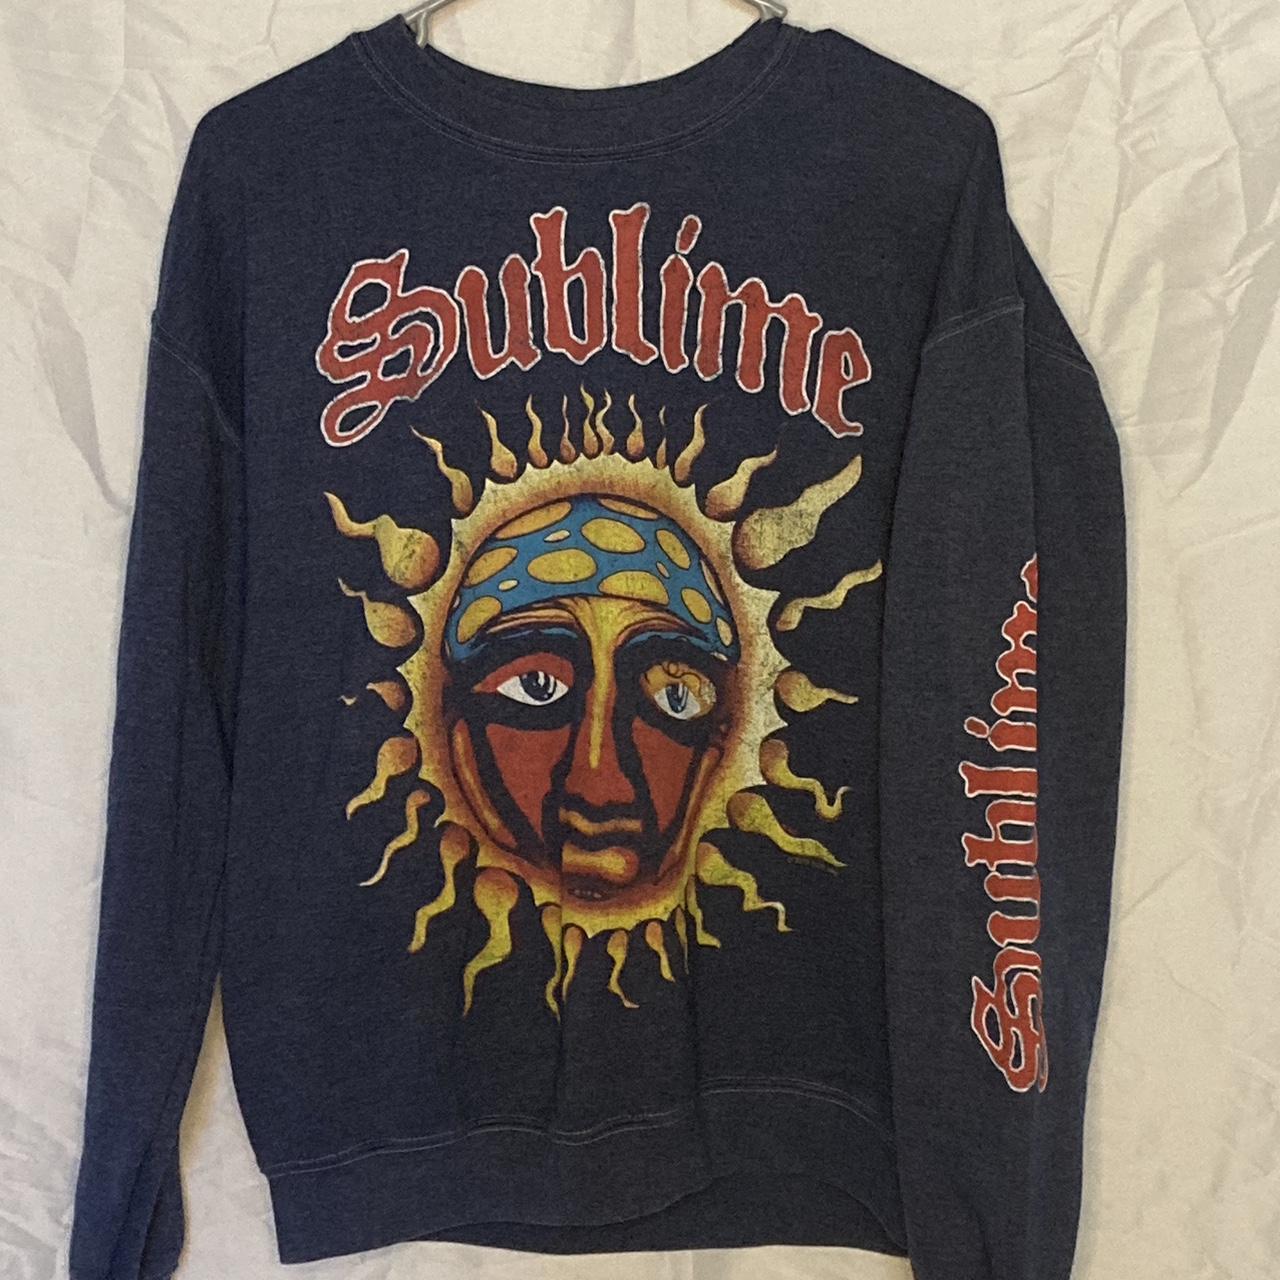 Urban Outfitters Sublime Sun Oversized Crew Neck Sweatshirt